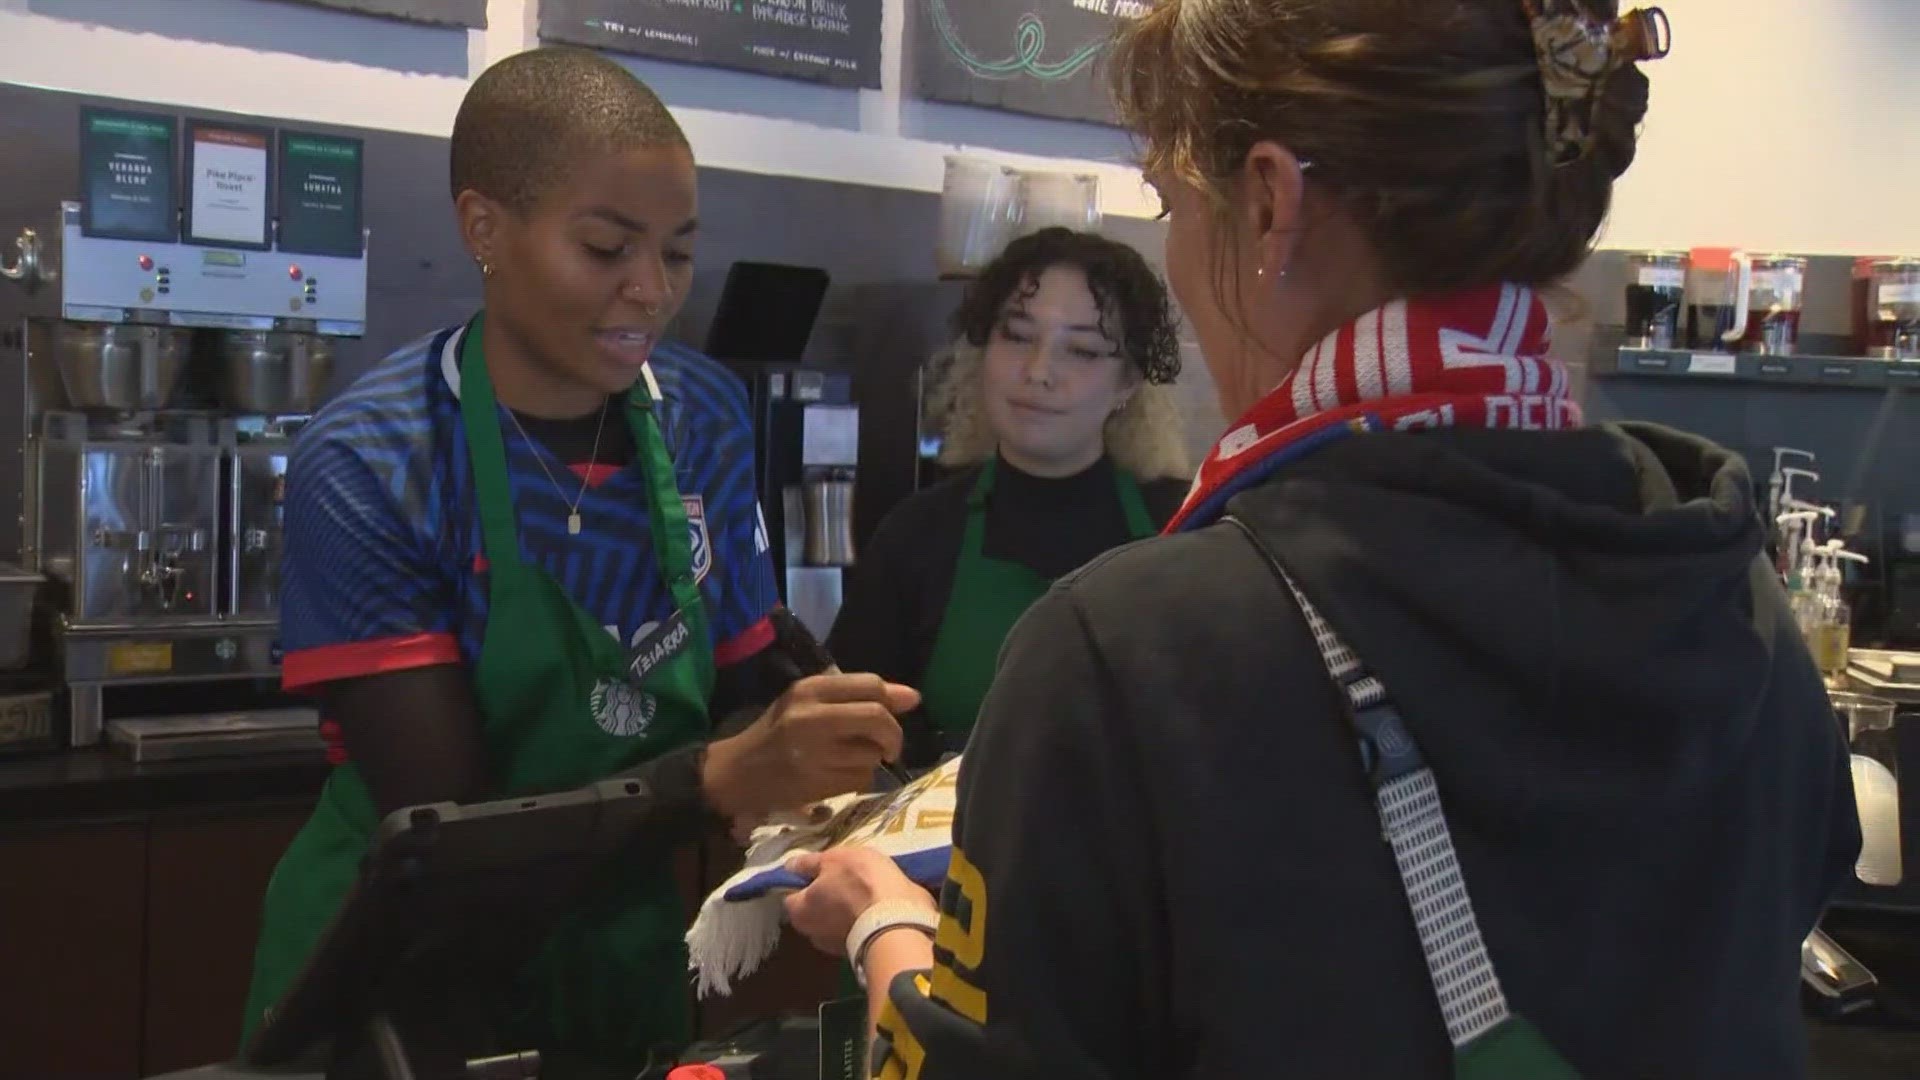 OL Reign players Jess Fishlock and Tziarra King are Starbucks Player Ambassadors hosting various community events.